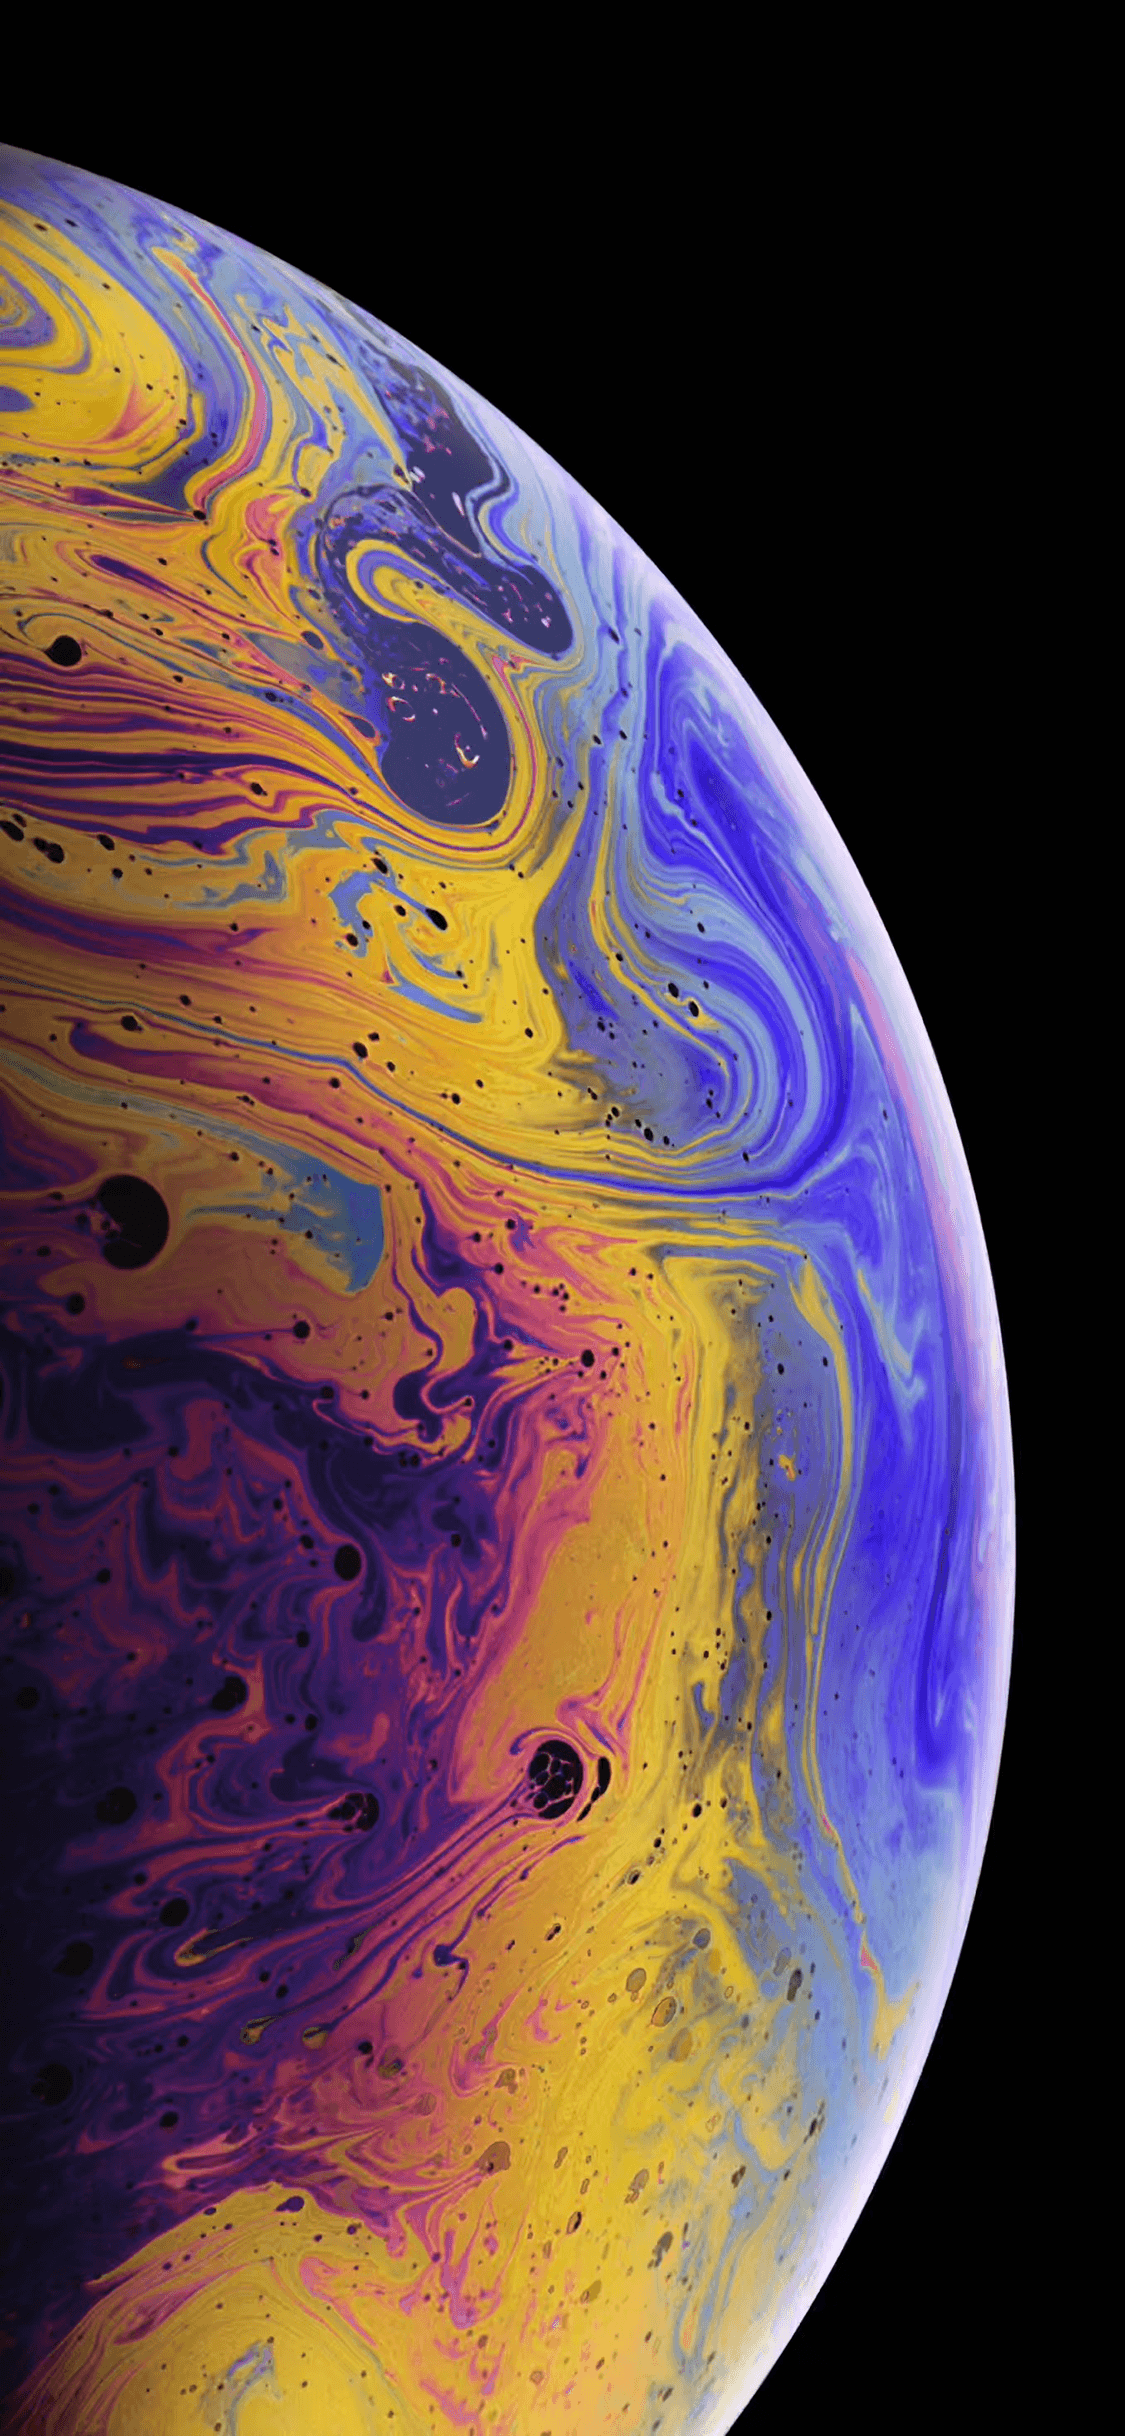 iPhone Planet Wallpaper 4k